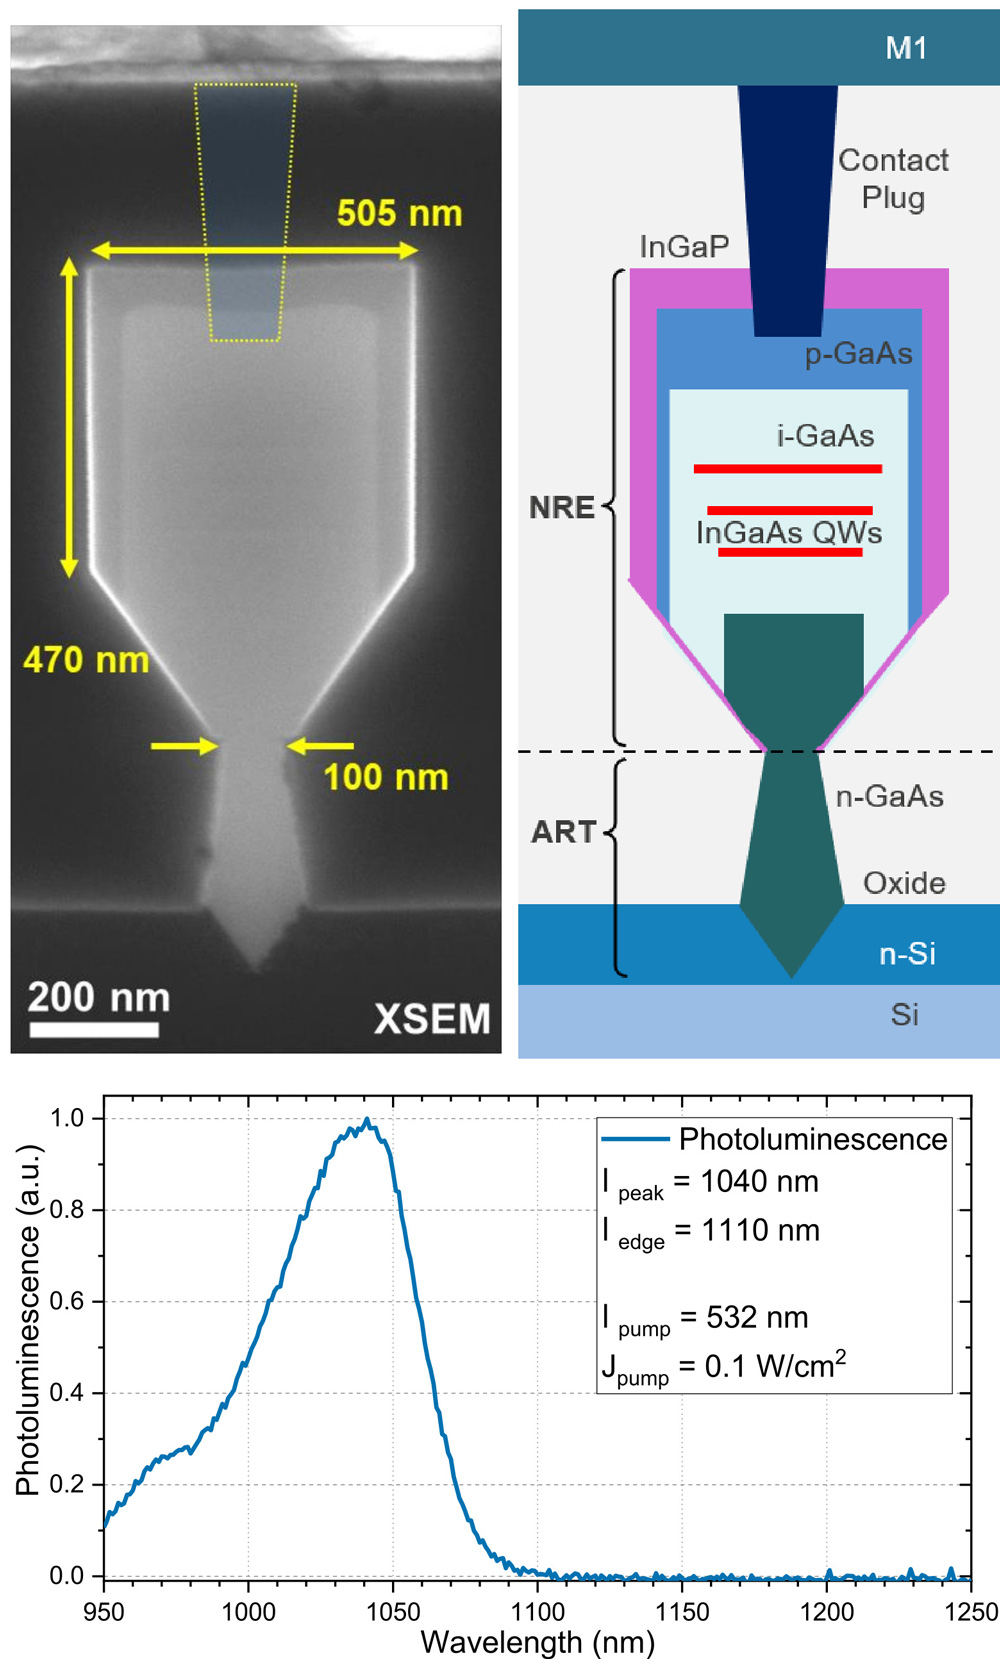 Figure 1: (top left) Cross-section scanning electron microcopy (XSEM) image of GaAs nanoridge with three InGaAs QWs. (top right) Schematic of nano-ridge cross-section. (bottom) Photoluminescence spectrum.